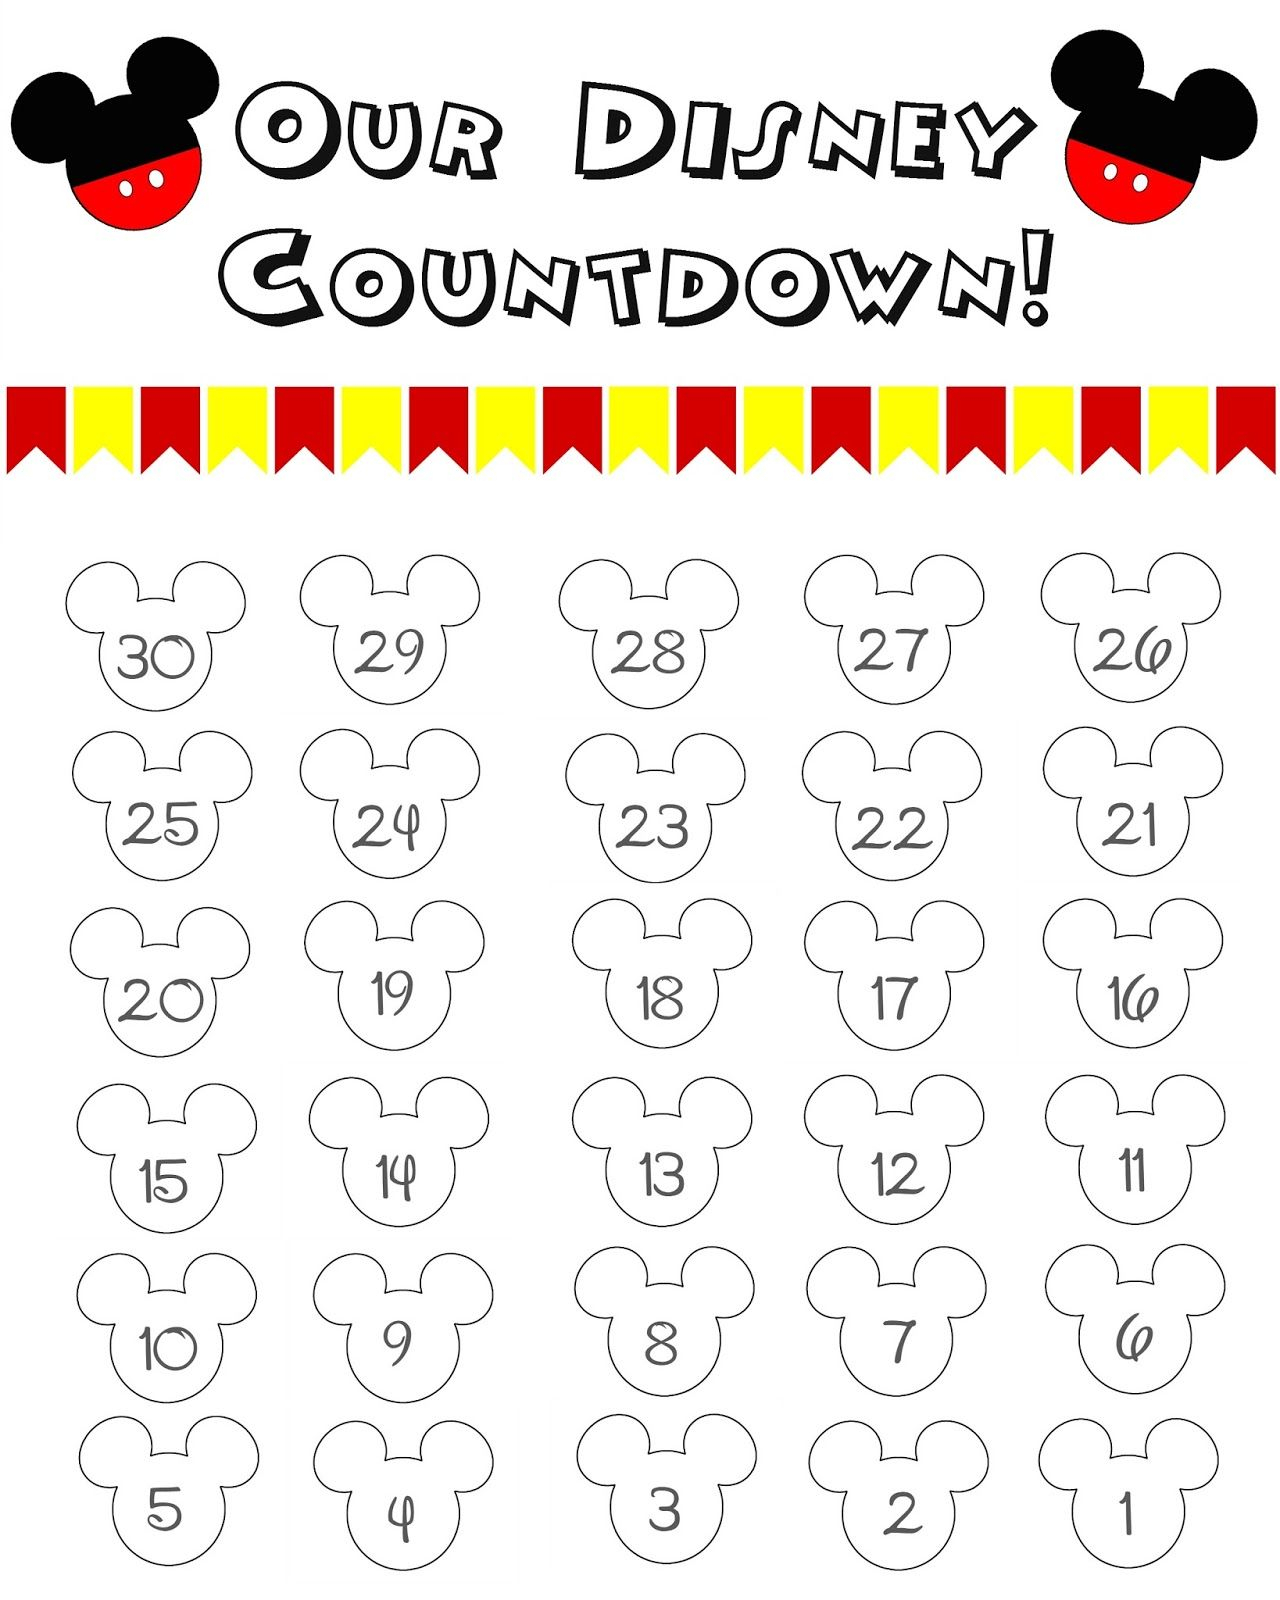 Disney World Countdown Calendar - Free Printable!! | Disney